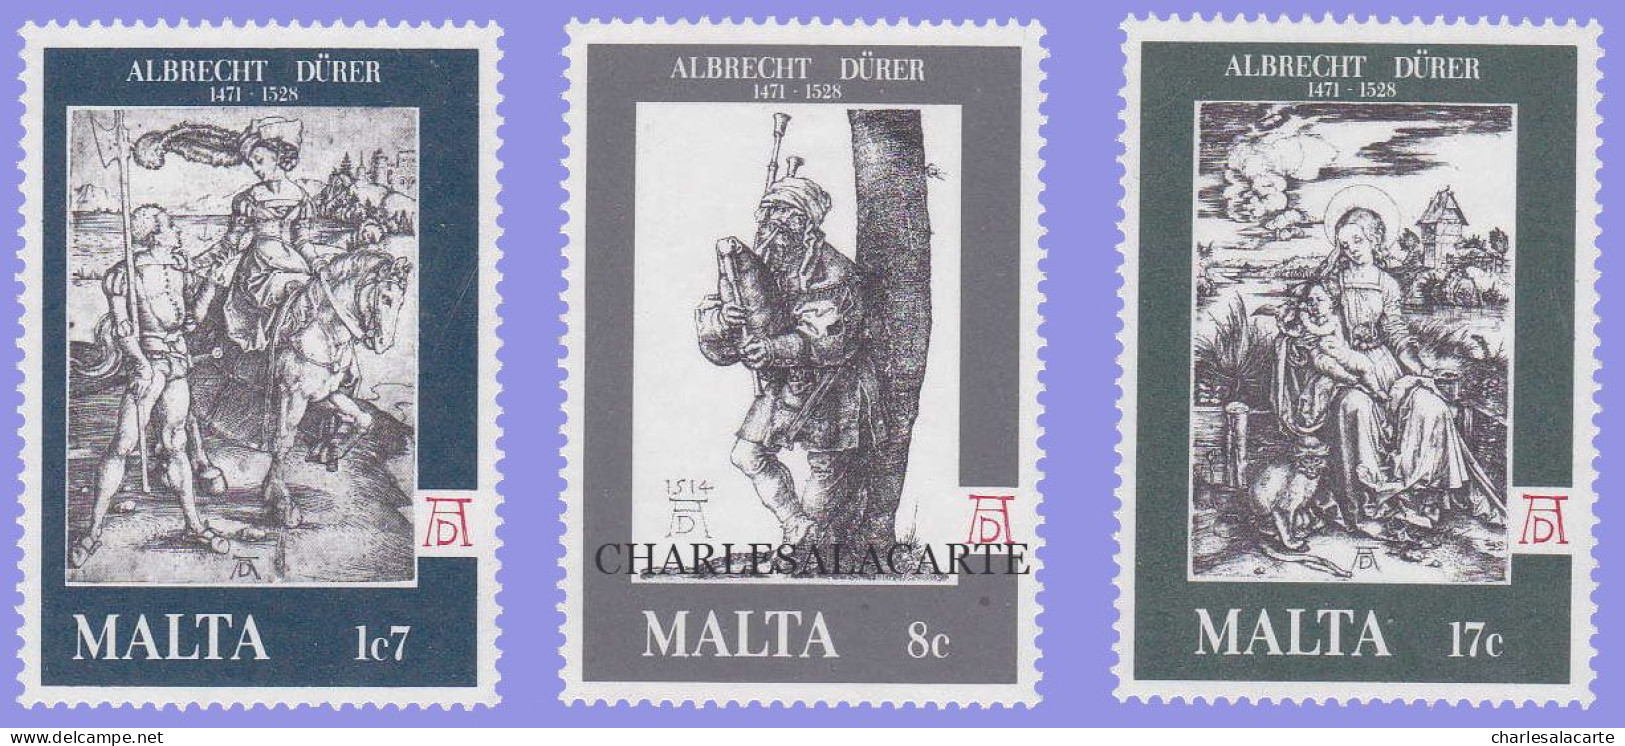 MALTA REPUBLIC  1978  DEATH ANNIVERSARY A. DURER  S.G. 596-598 U.M. - Malta